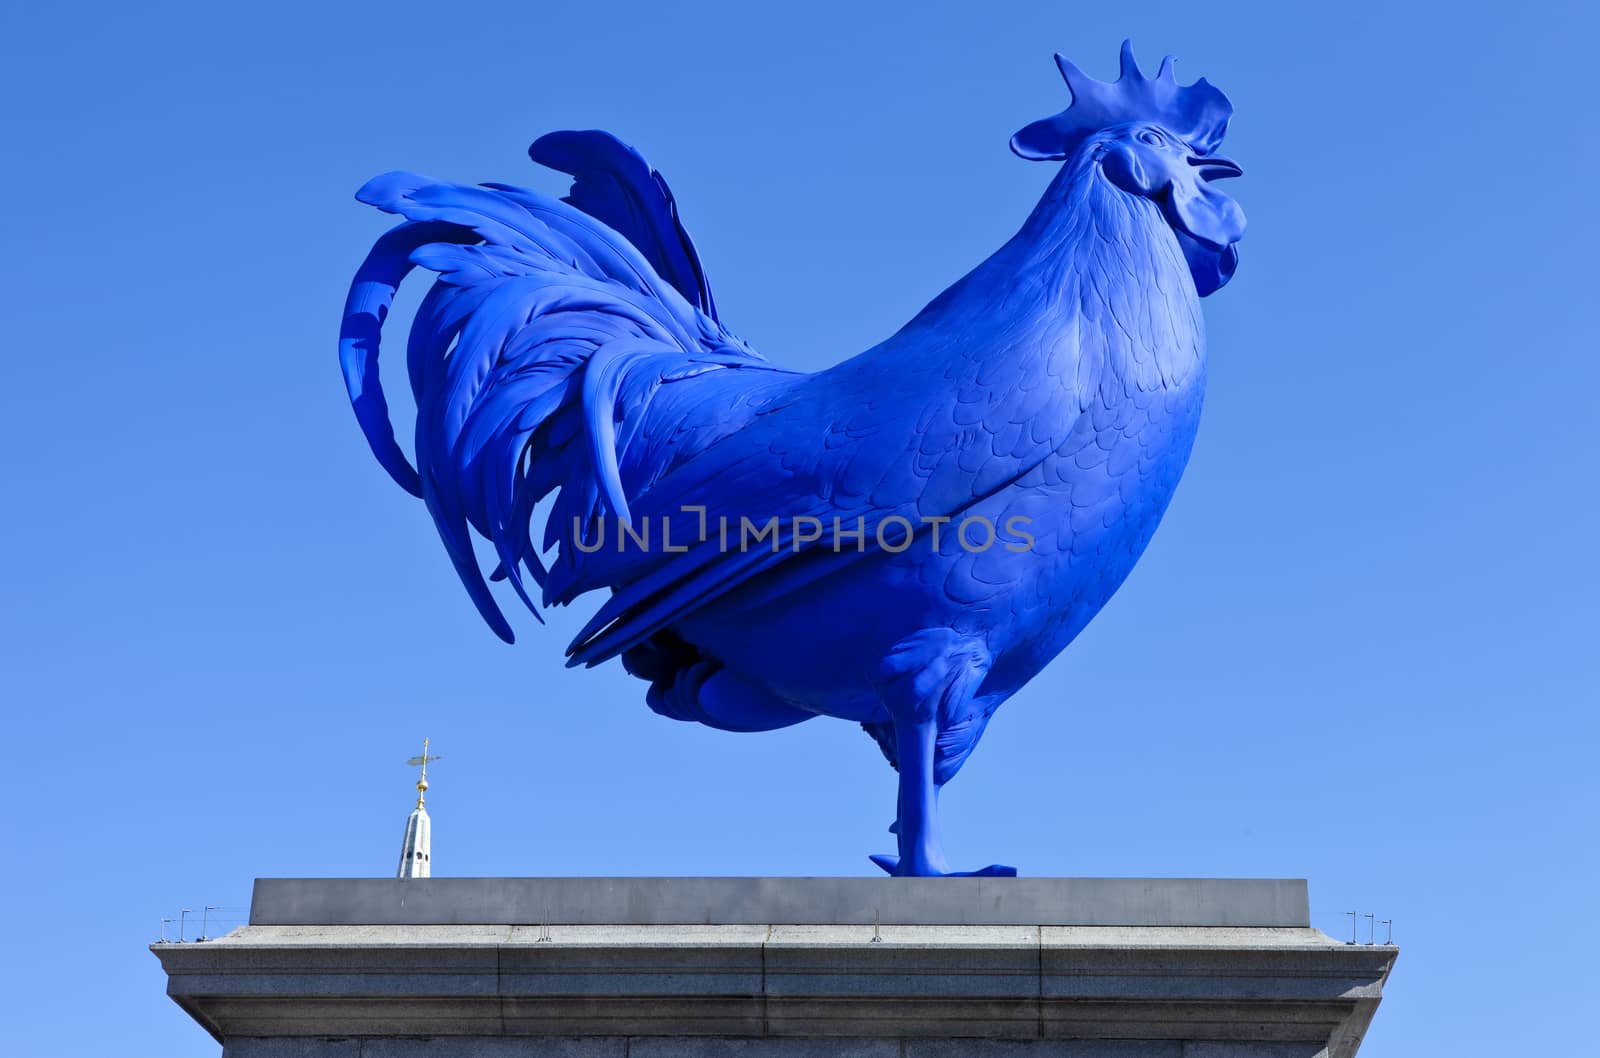 The Blue Cockerel in Trafalgar Square by chrisdorney